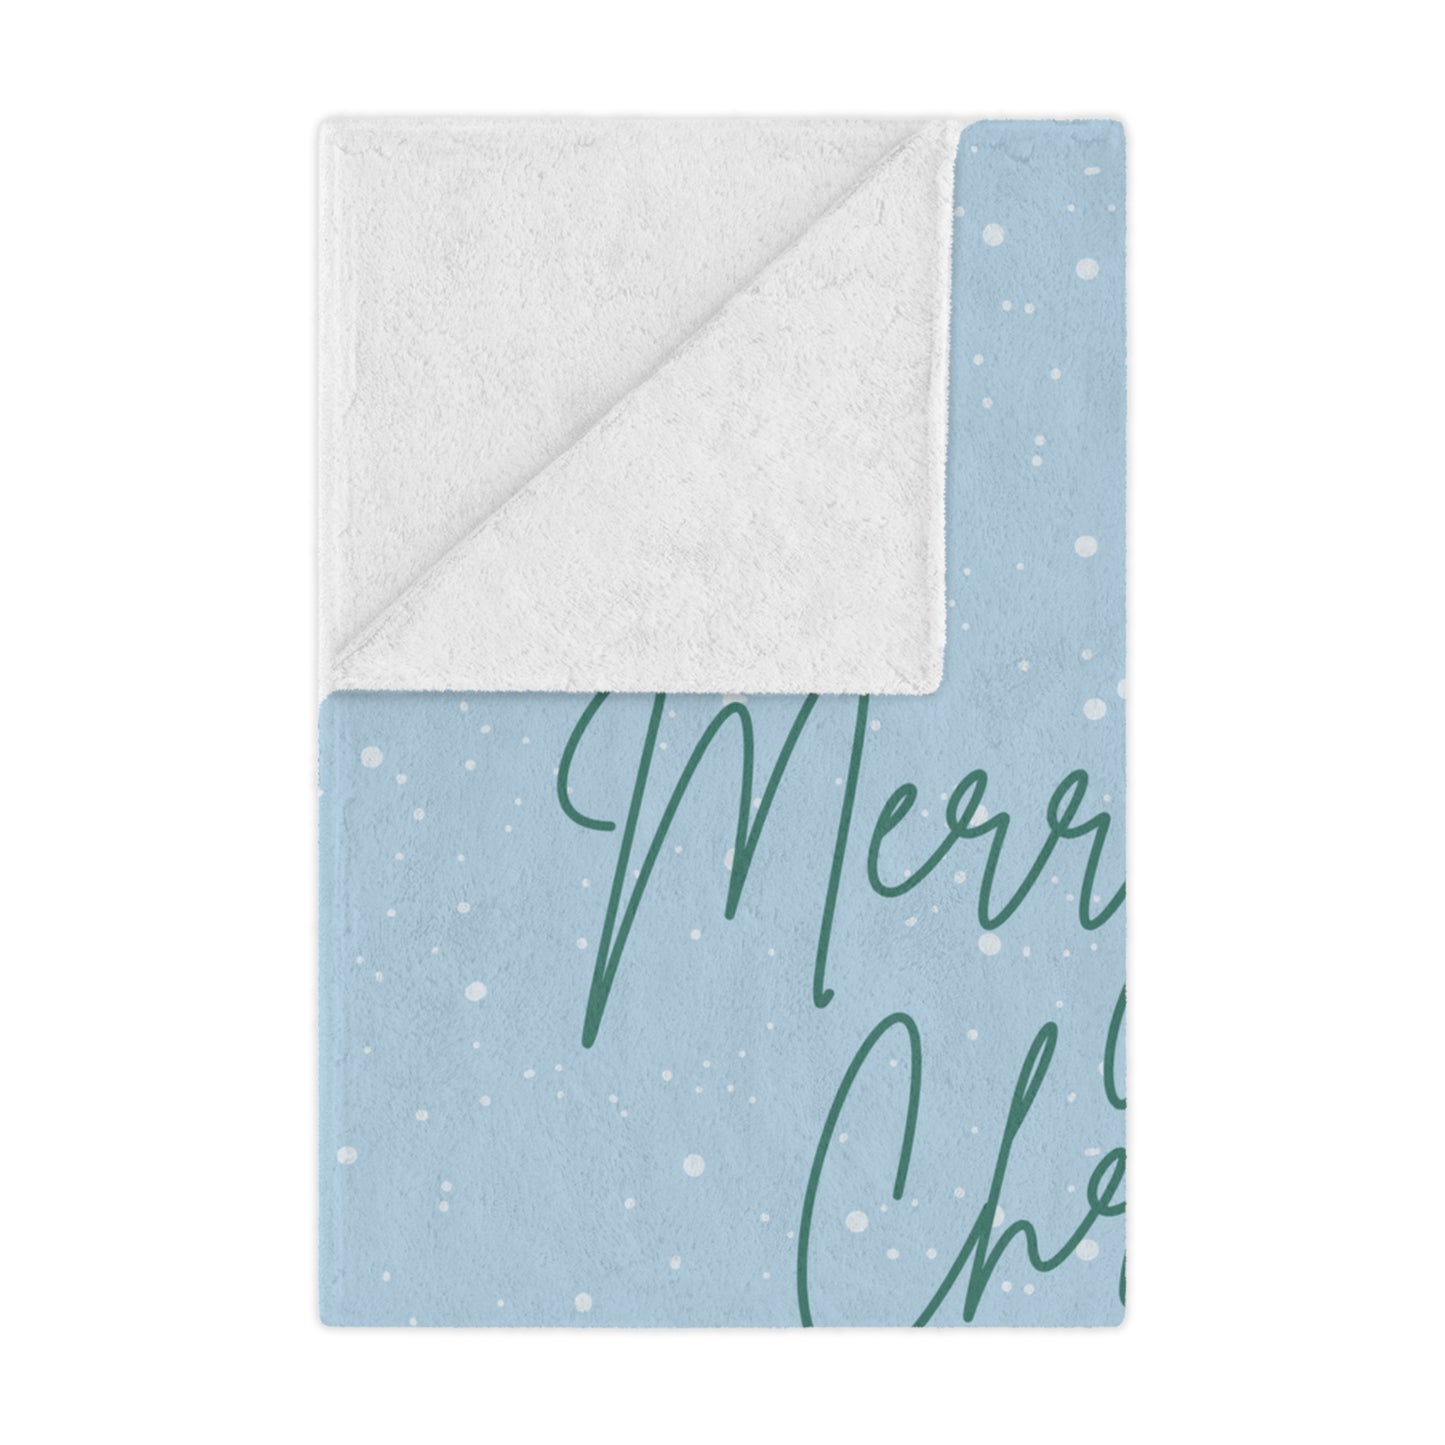 Merry Christmas Printed Minky Blanket, Sky Blue